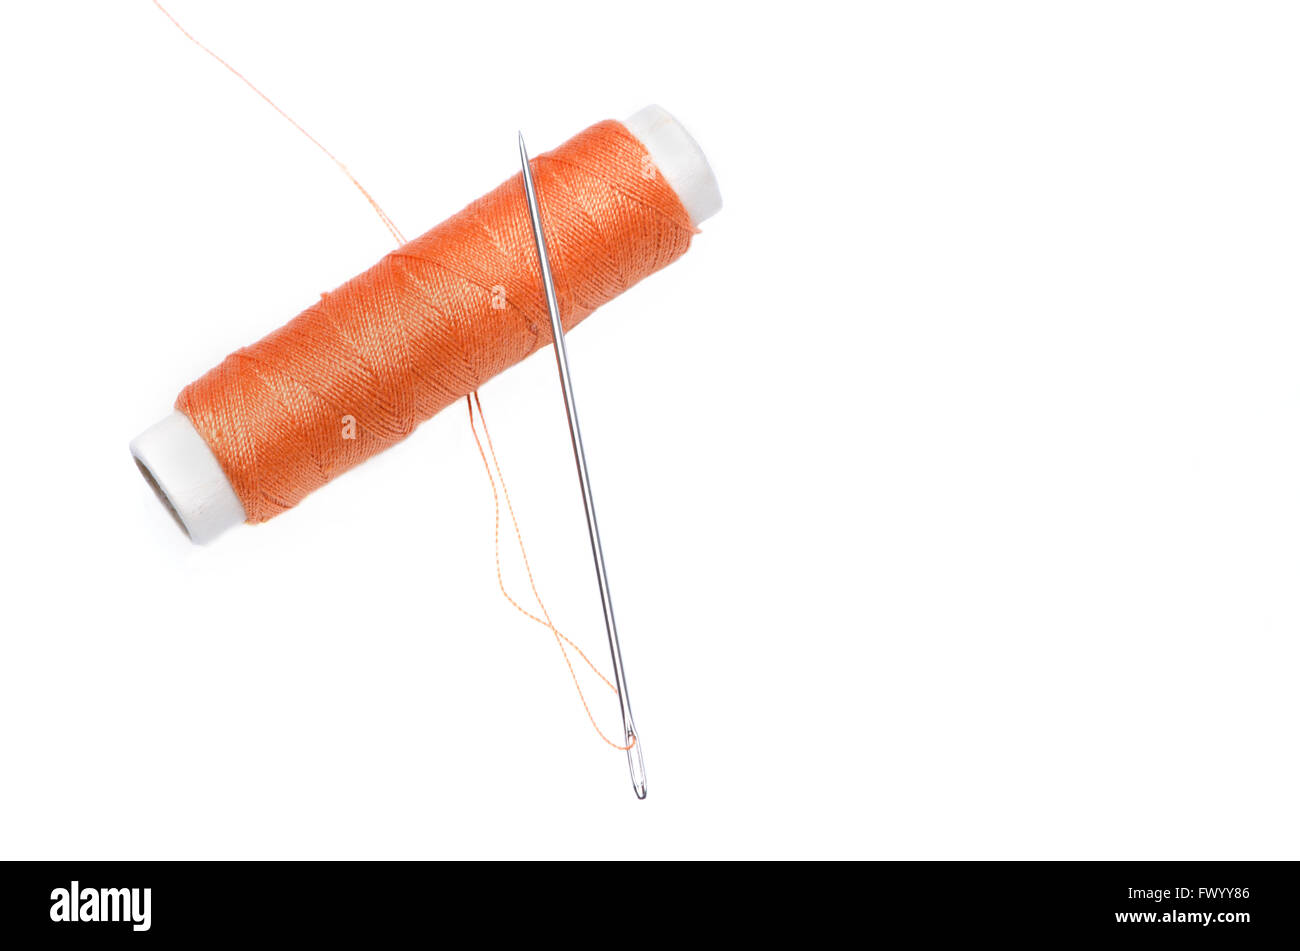 Reel of orange thread and needle isolated on white background. Stock Photo